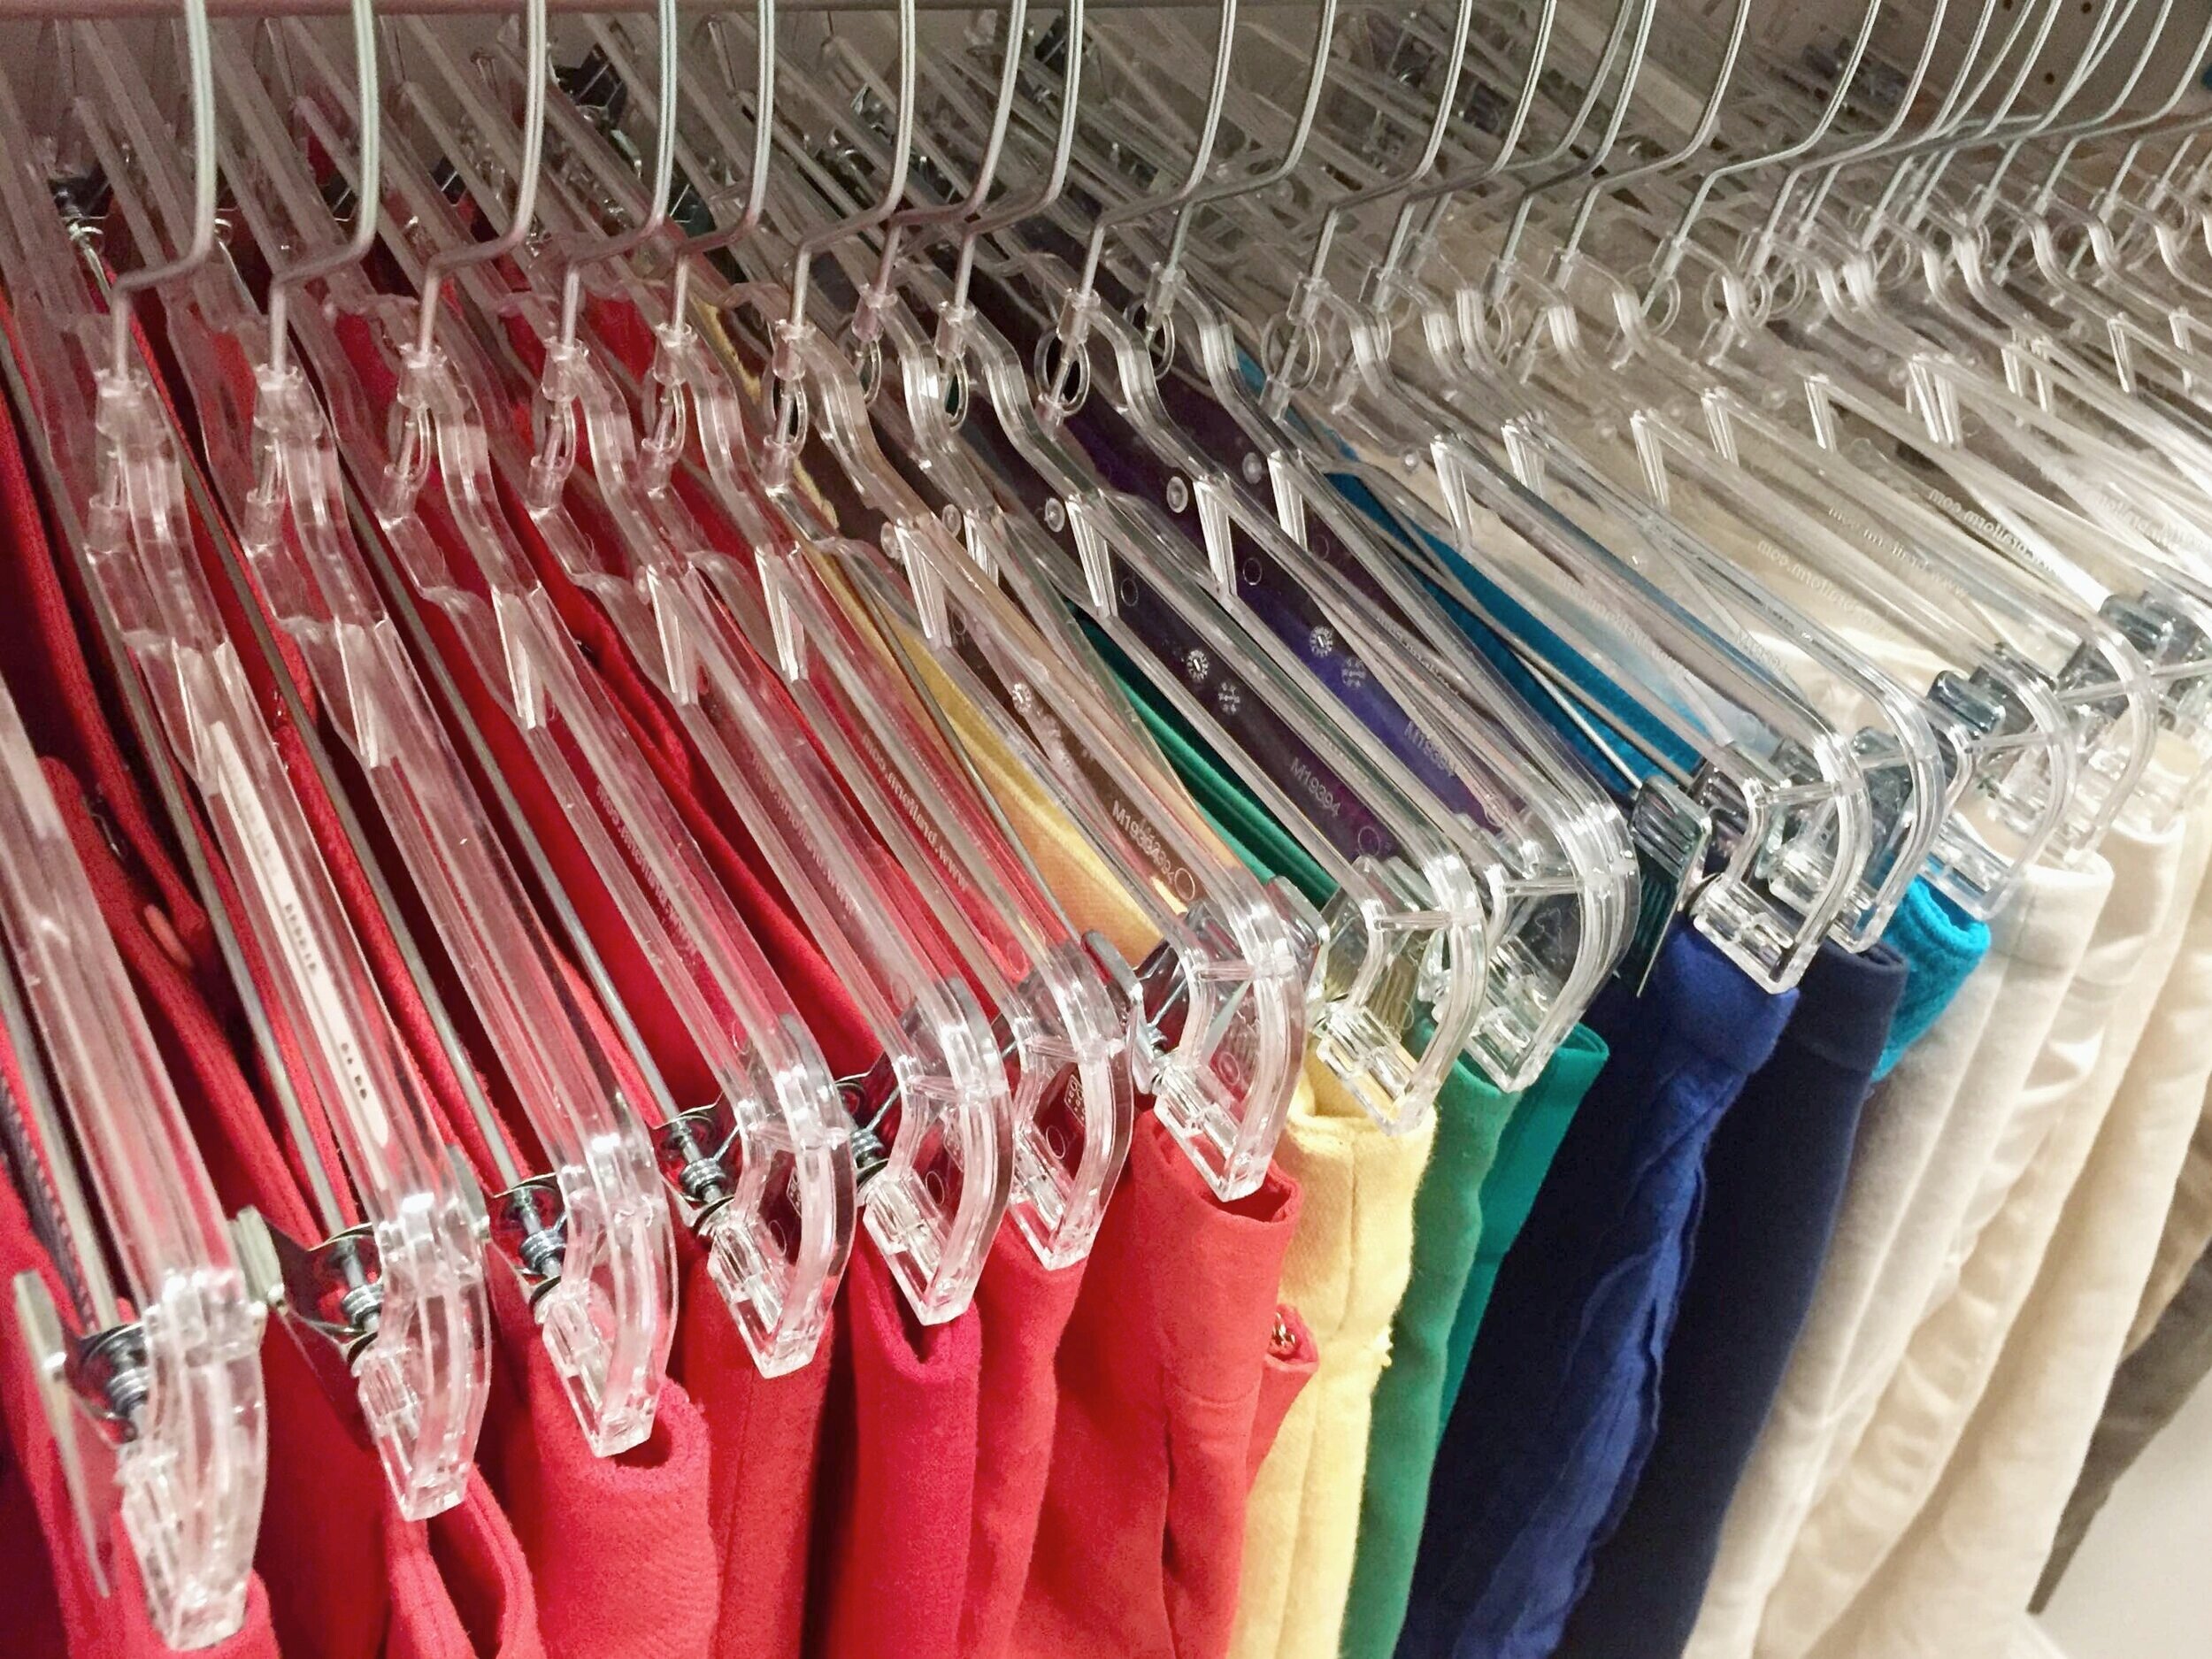 LME-organizing-closet-hangers-rainbow-CG.jpg